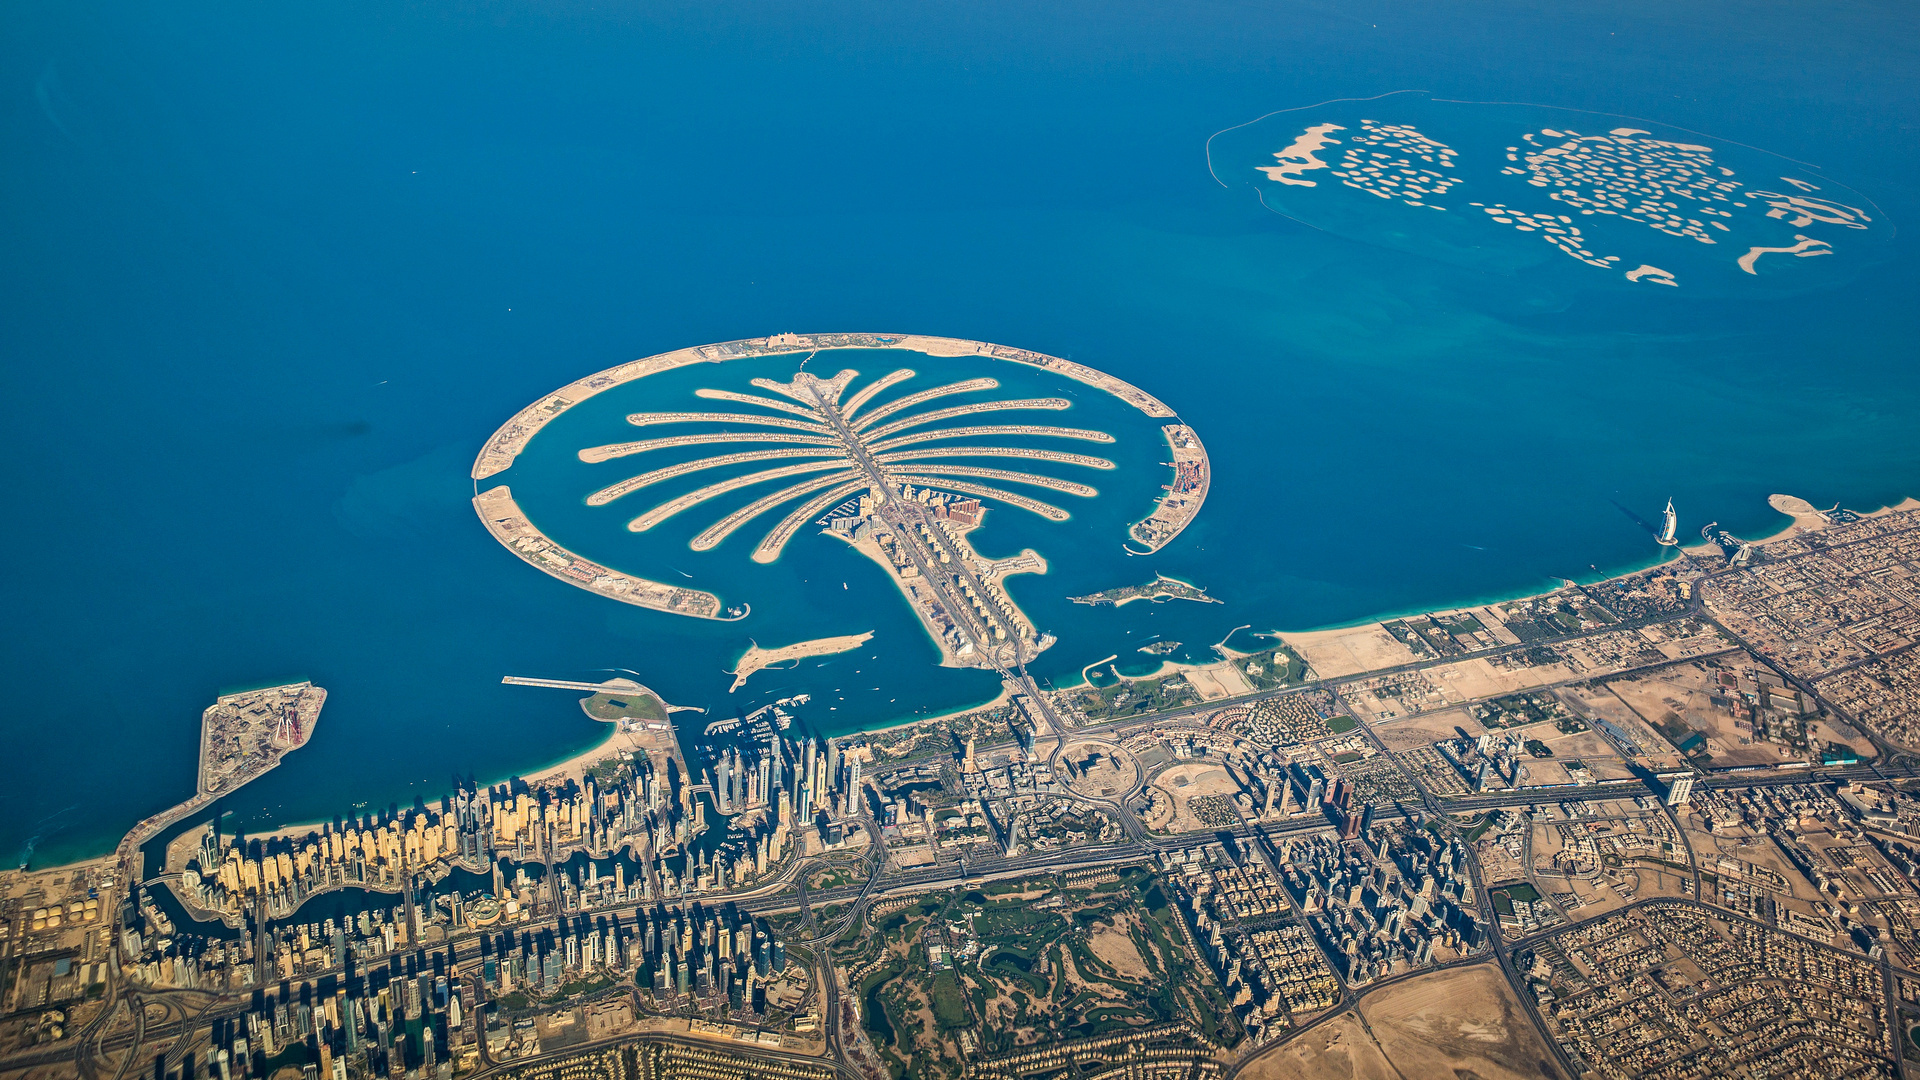 Dubai_Island_Palm_Jumeirah_From_above_592728_4944x3253.jpg